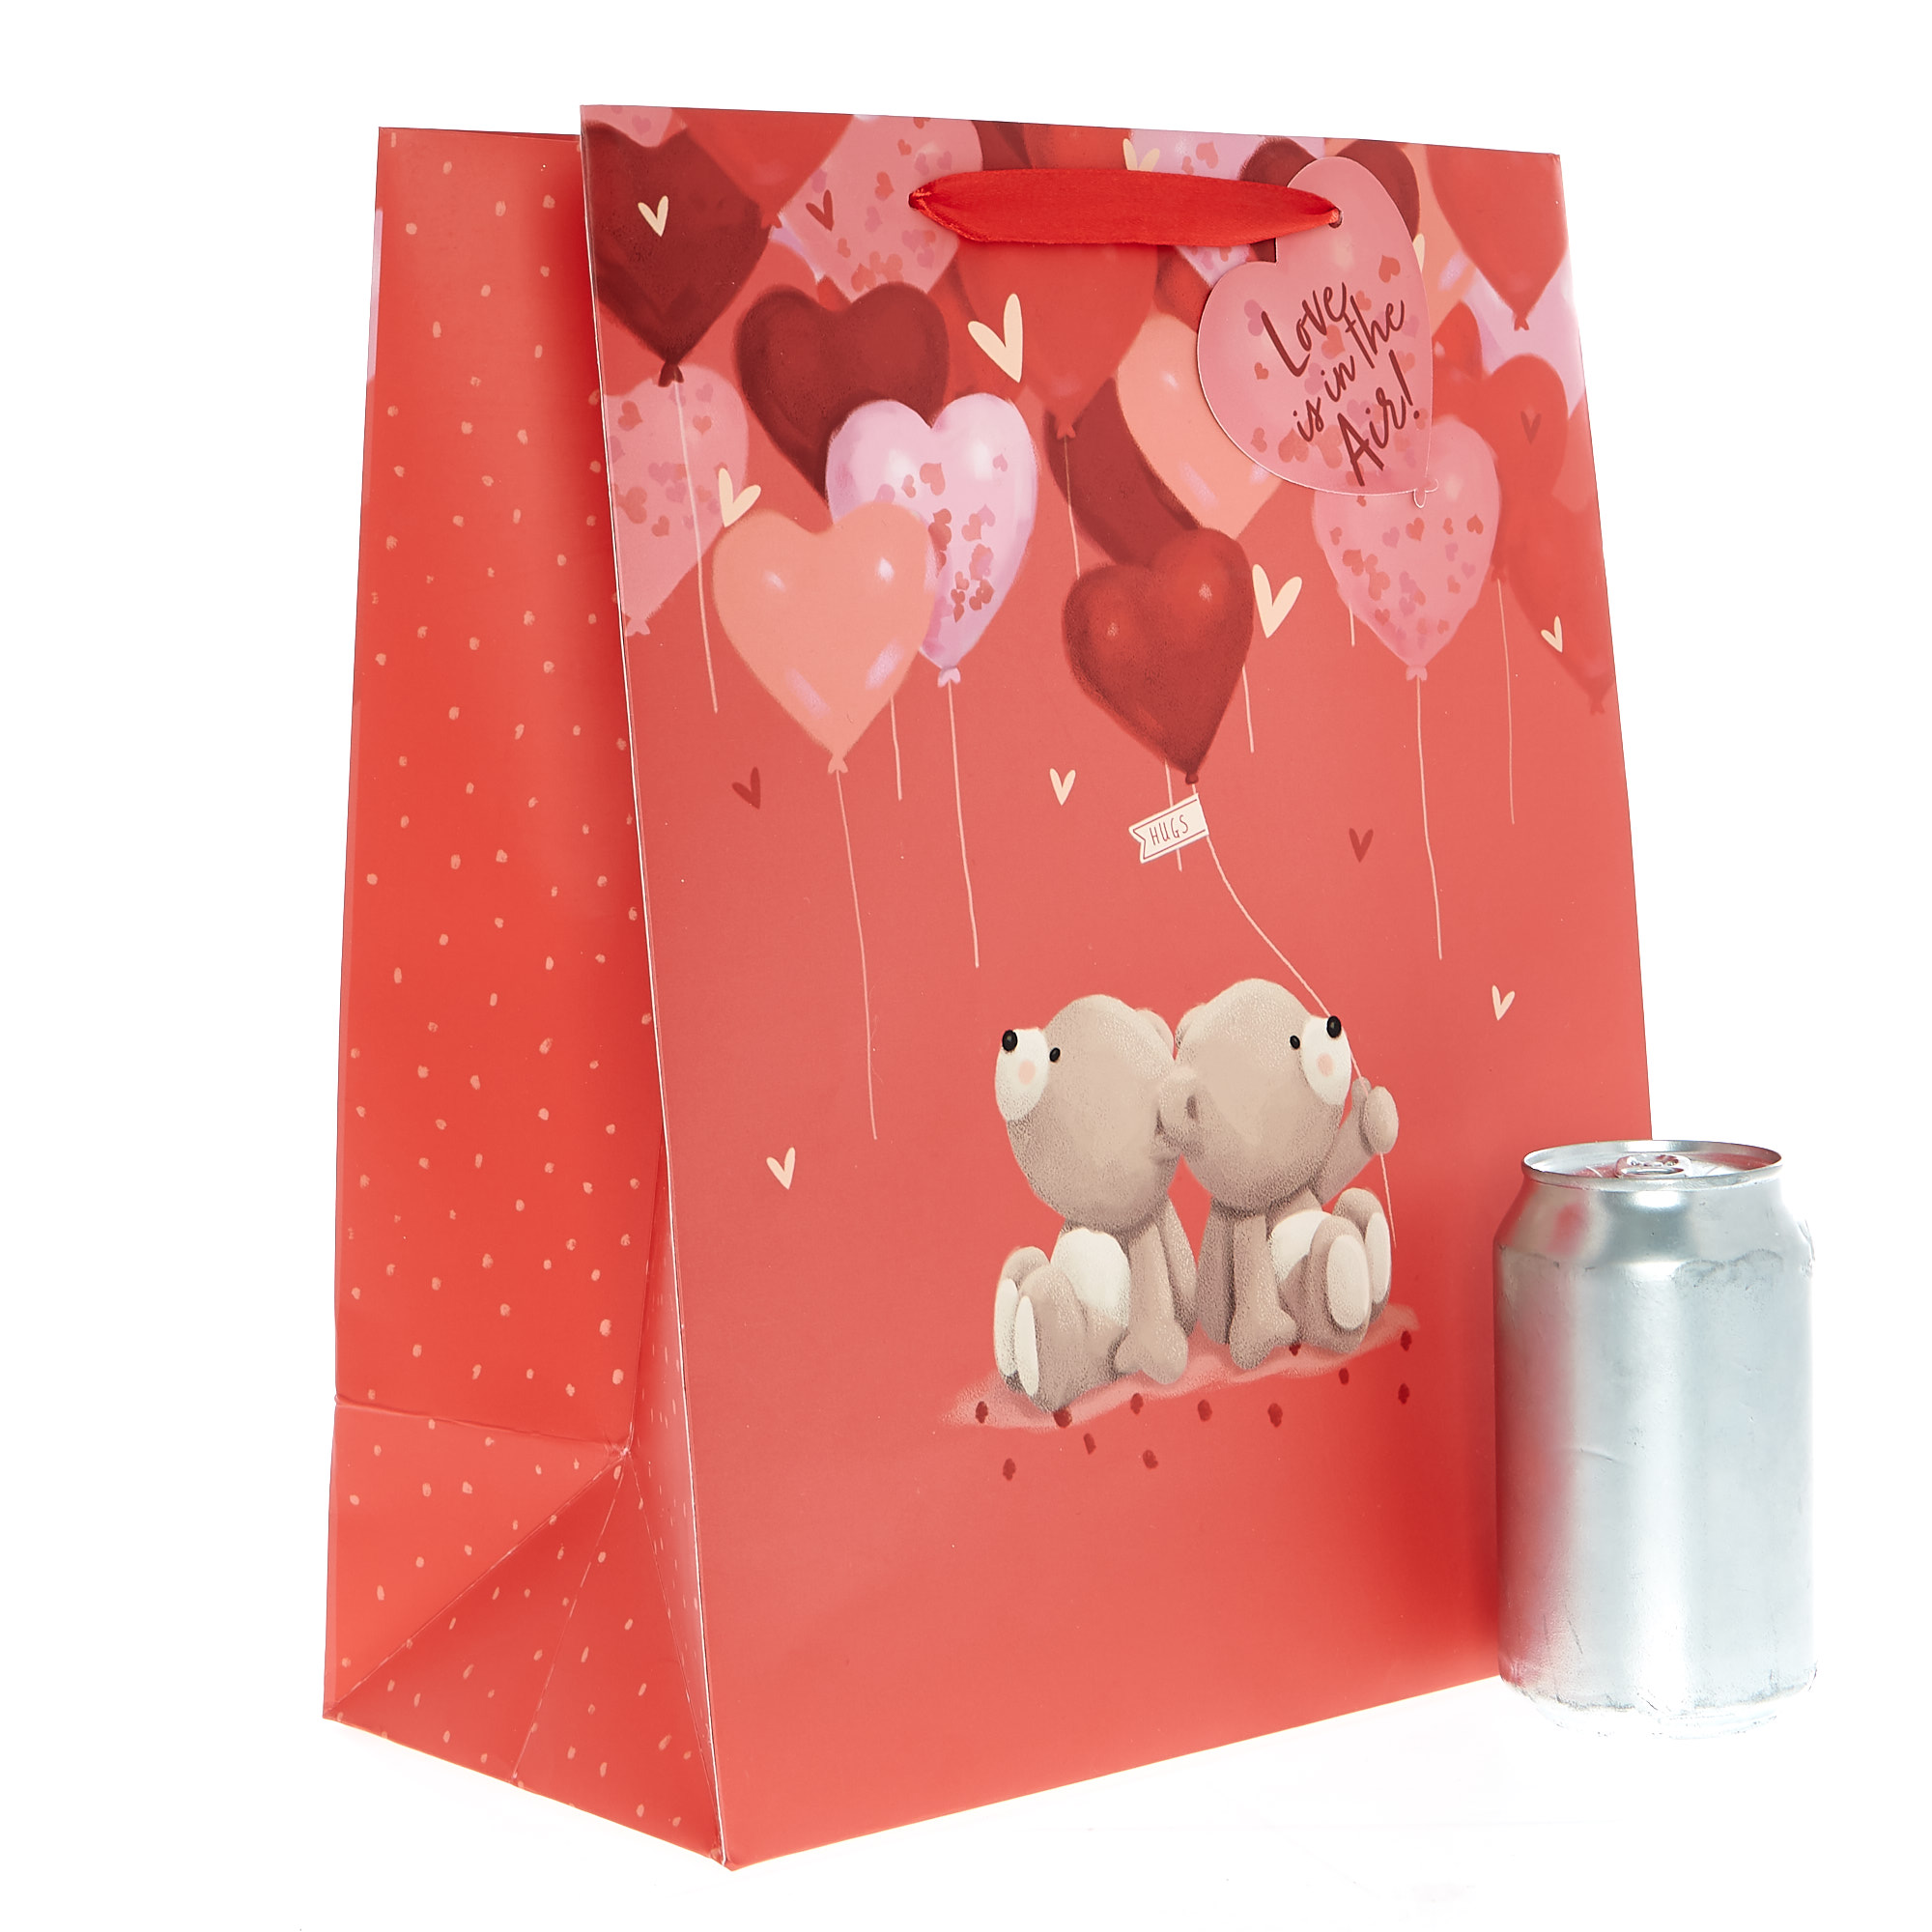 Large Hugs Bear Valentine's Day Gift Bundle